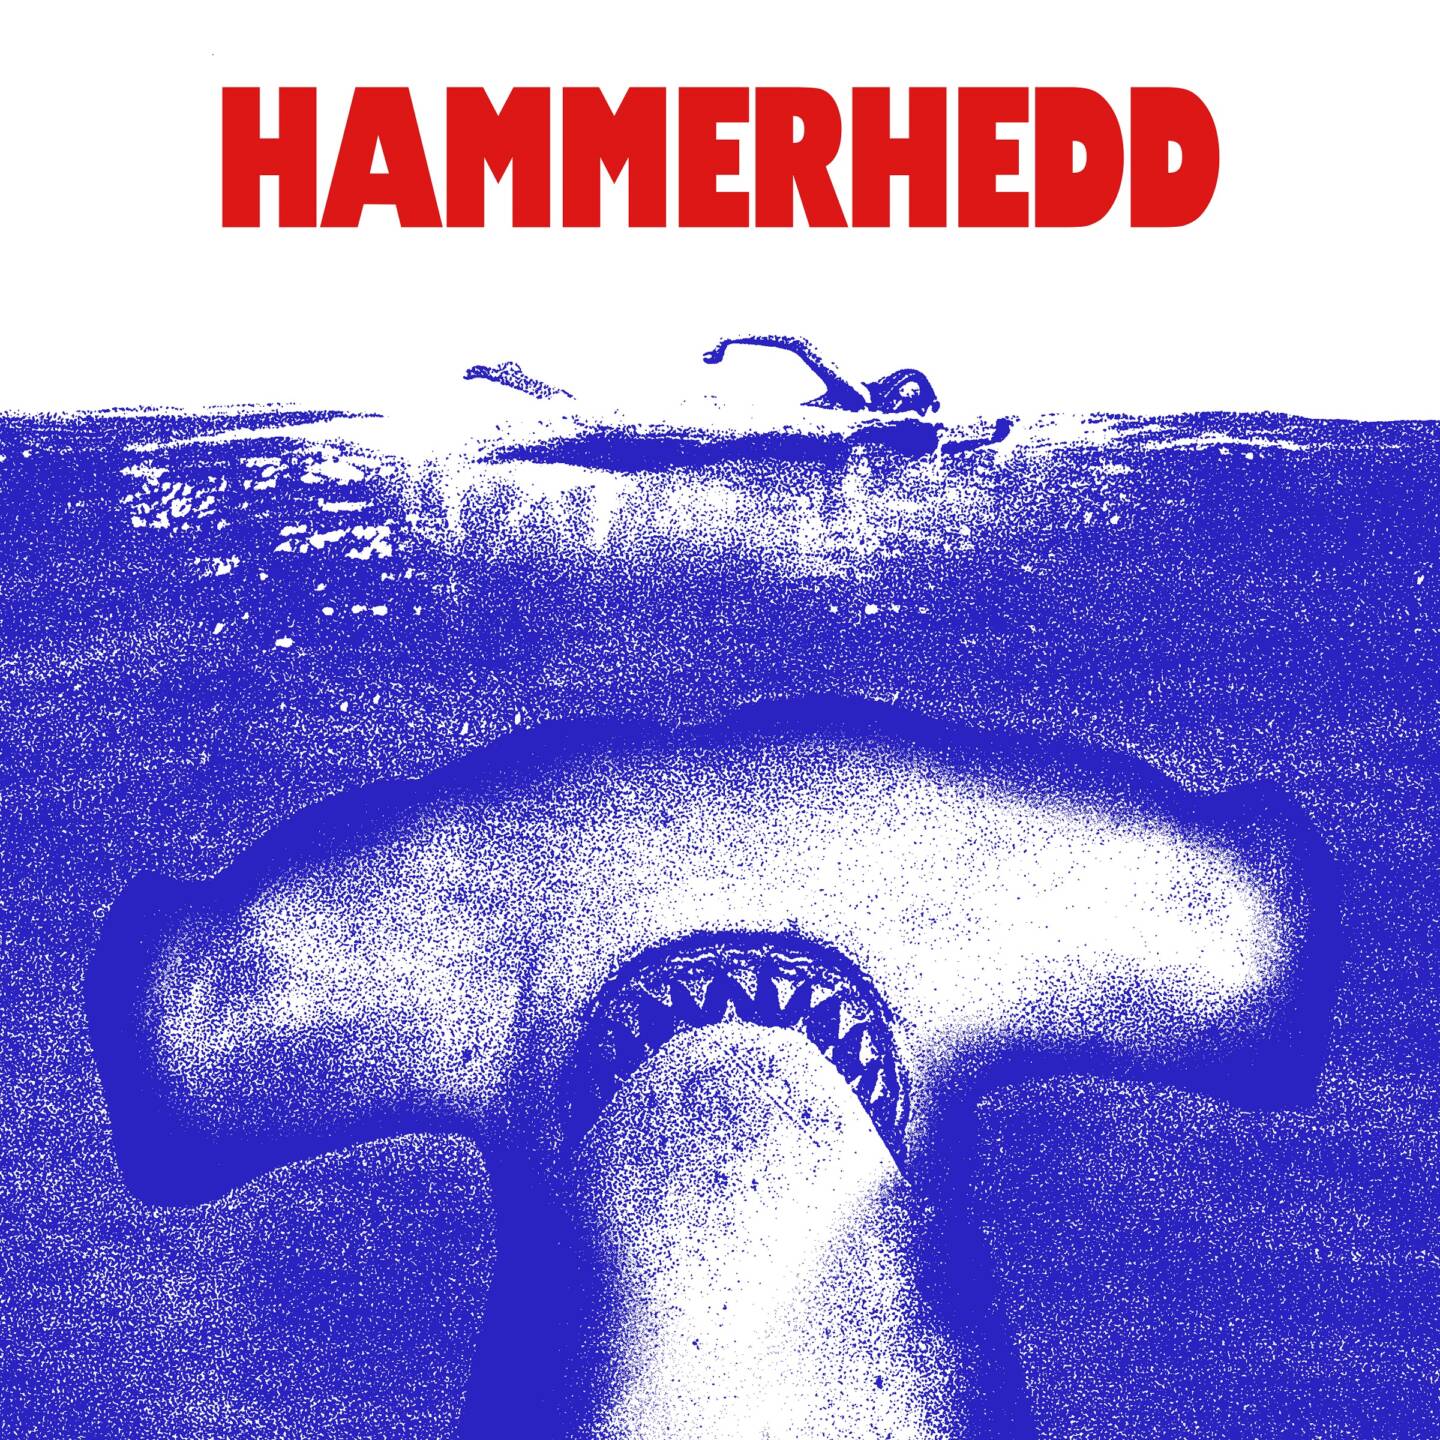 Hammerhedd_Nonetheless